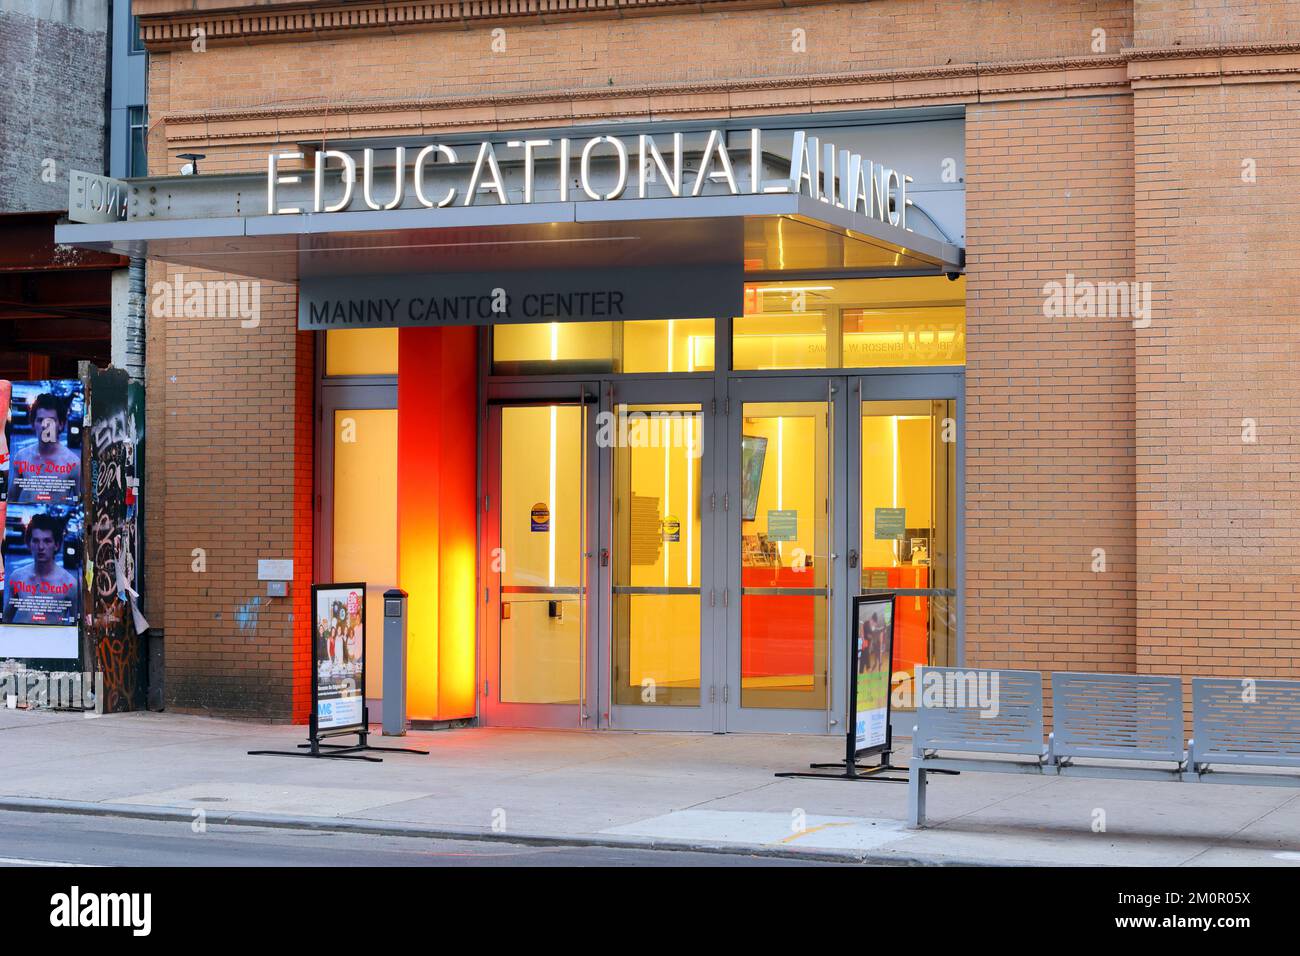 Manny Cantor Center @ Educational Alliance, 197 E Broadway, Nueva York, NYC foto del escaparate de centro comunitario en Manhattan Chinatown/Lower East Side Foto de stock